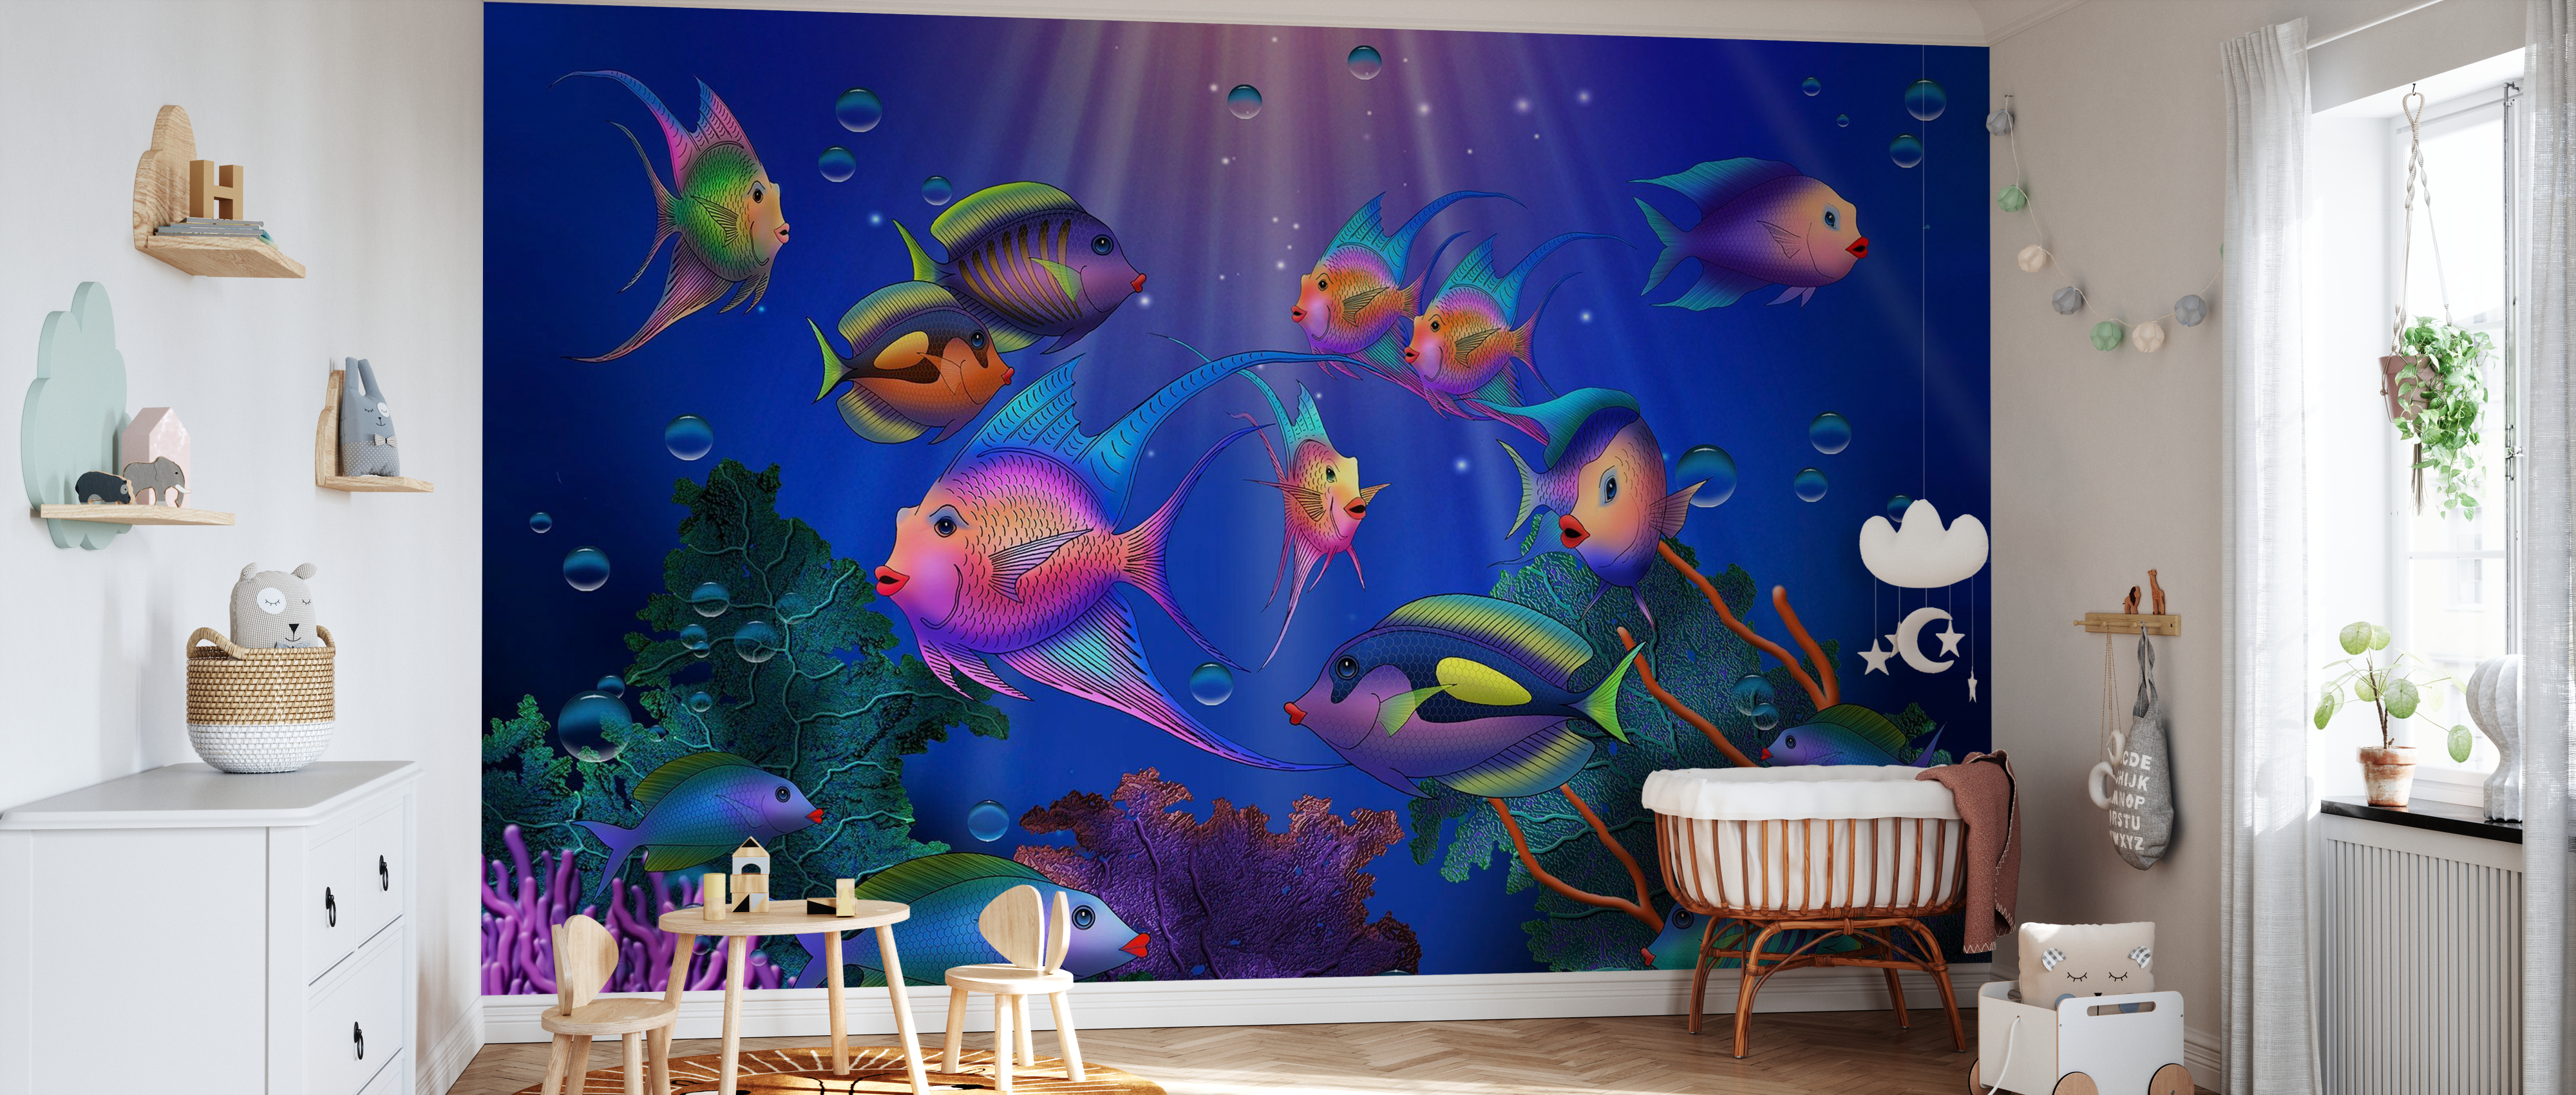 Giant Wall mural photo Wallpaper 368x254cm Budda & gold fish 